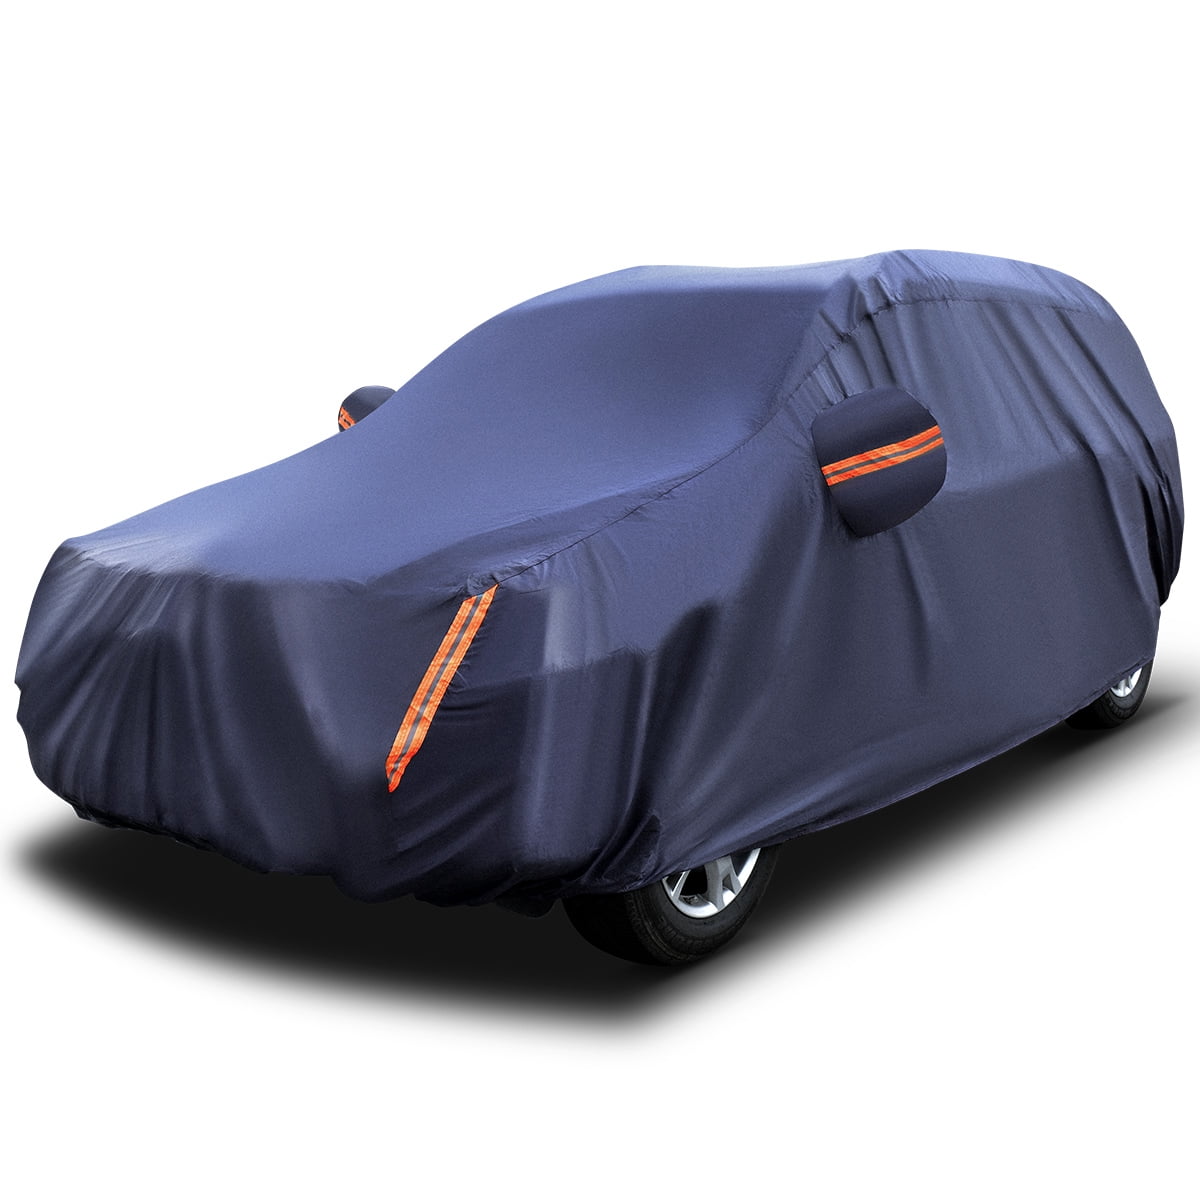 Full SUV/Van Car Cover for Dodge Journey Motor Trend UV Dirt Scratch Resistant 